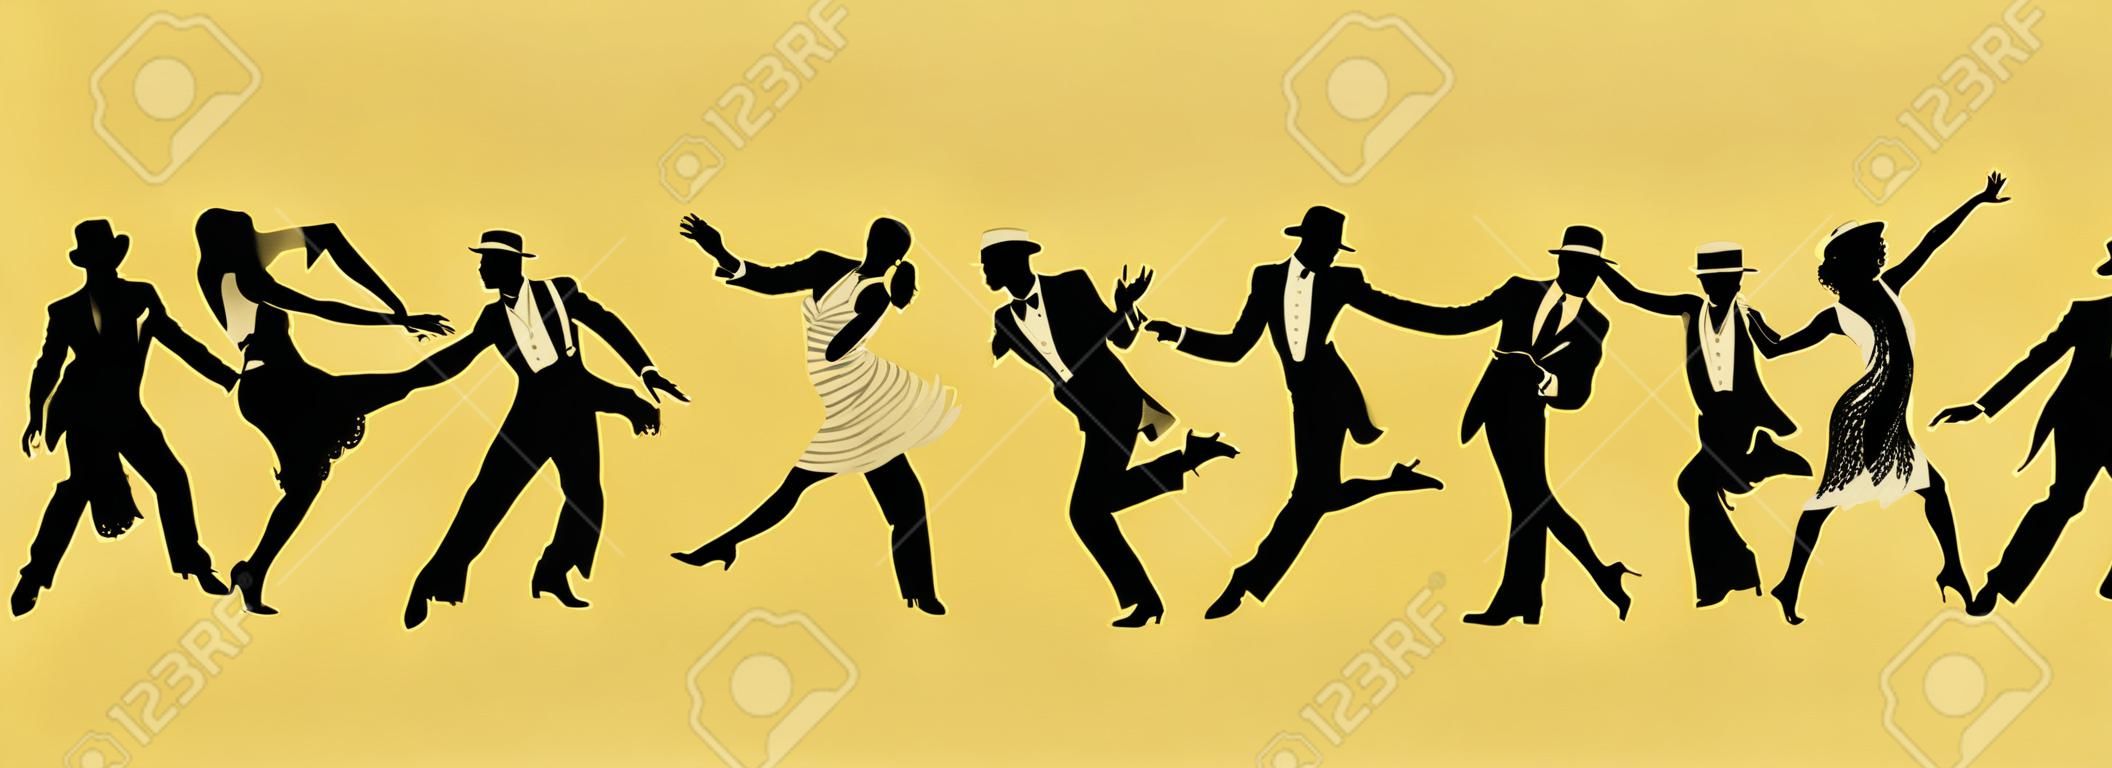 Silhouettes of nine people dancing Charleston